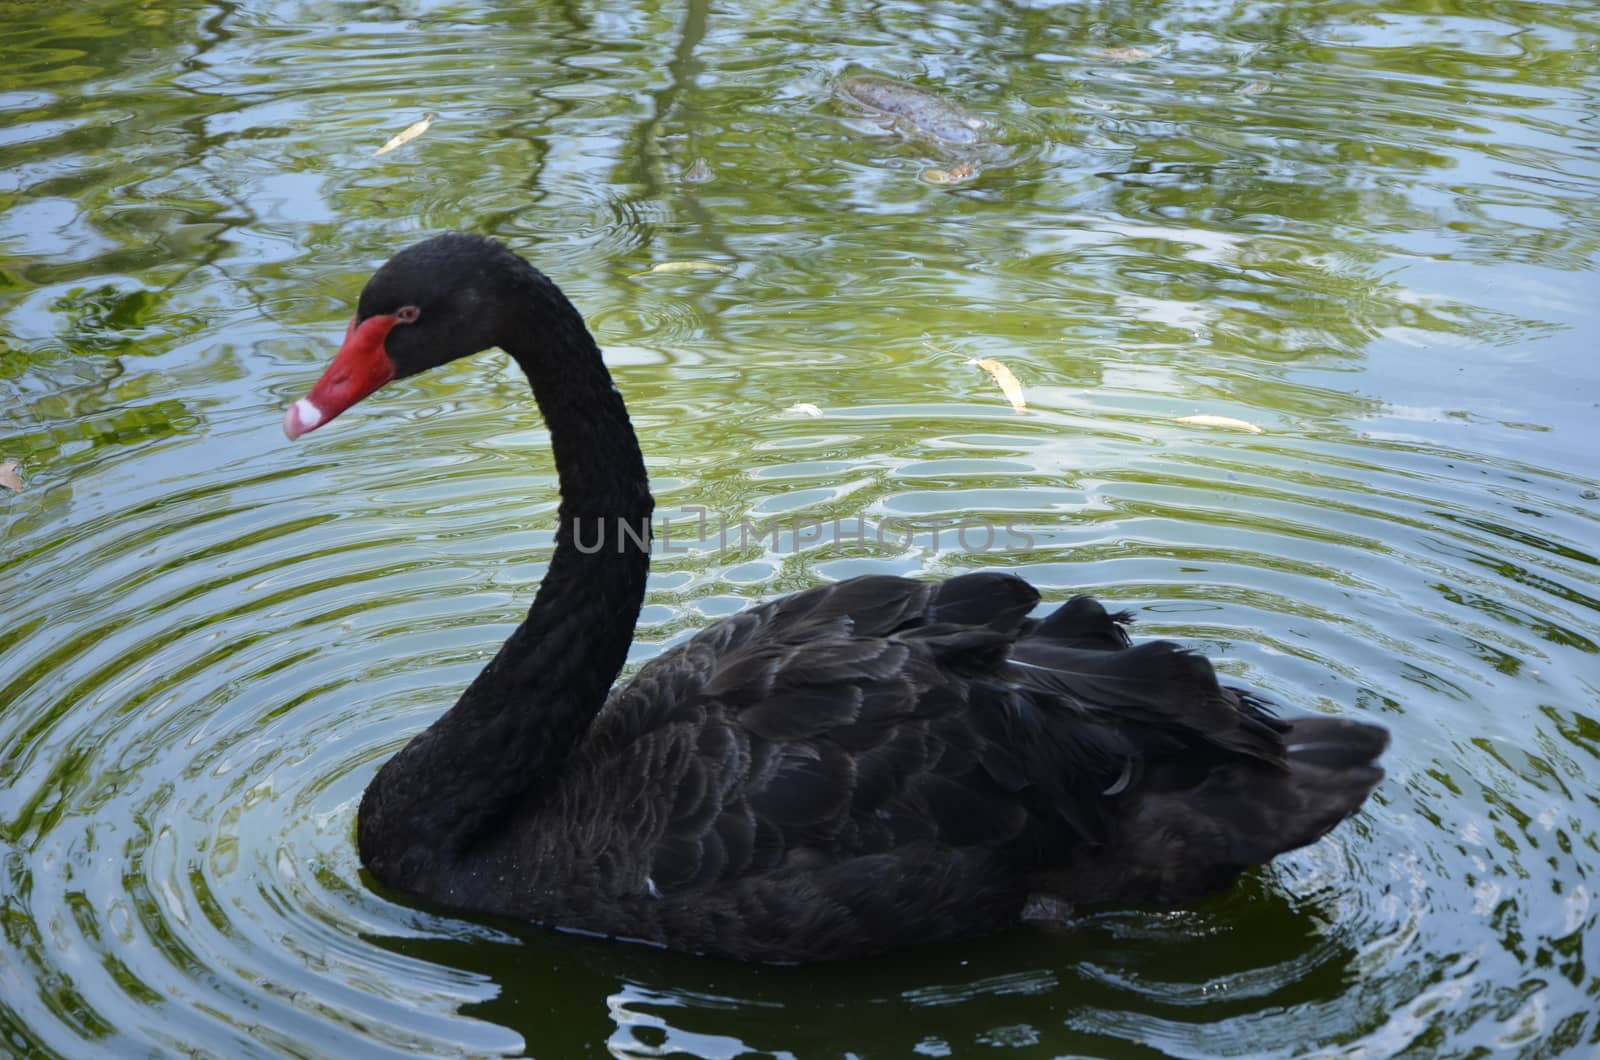 Balck swan in the water